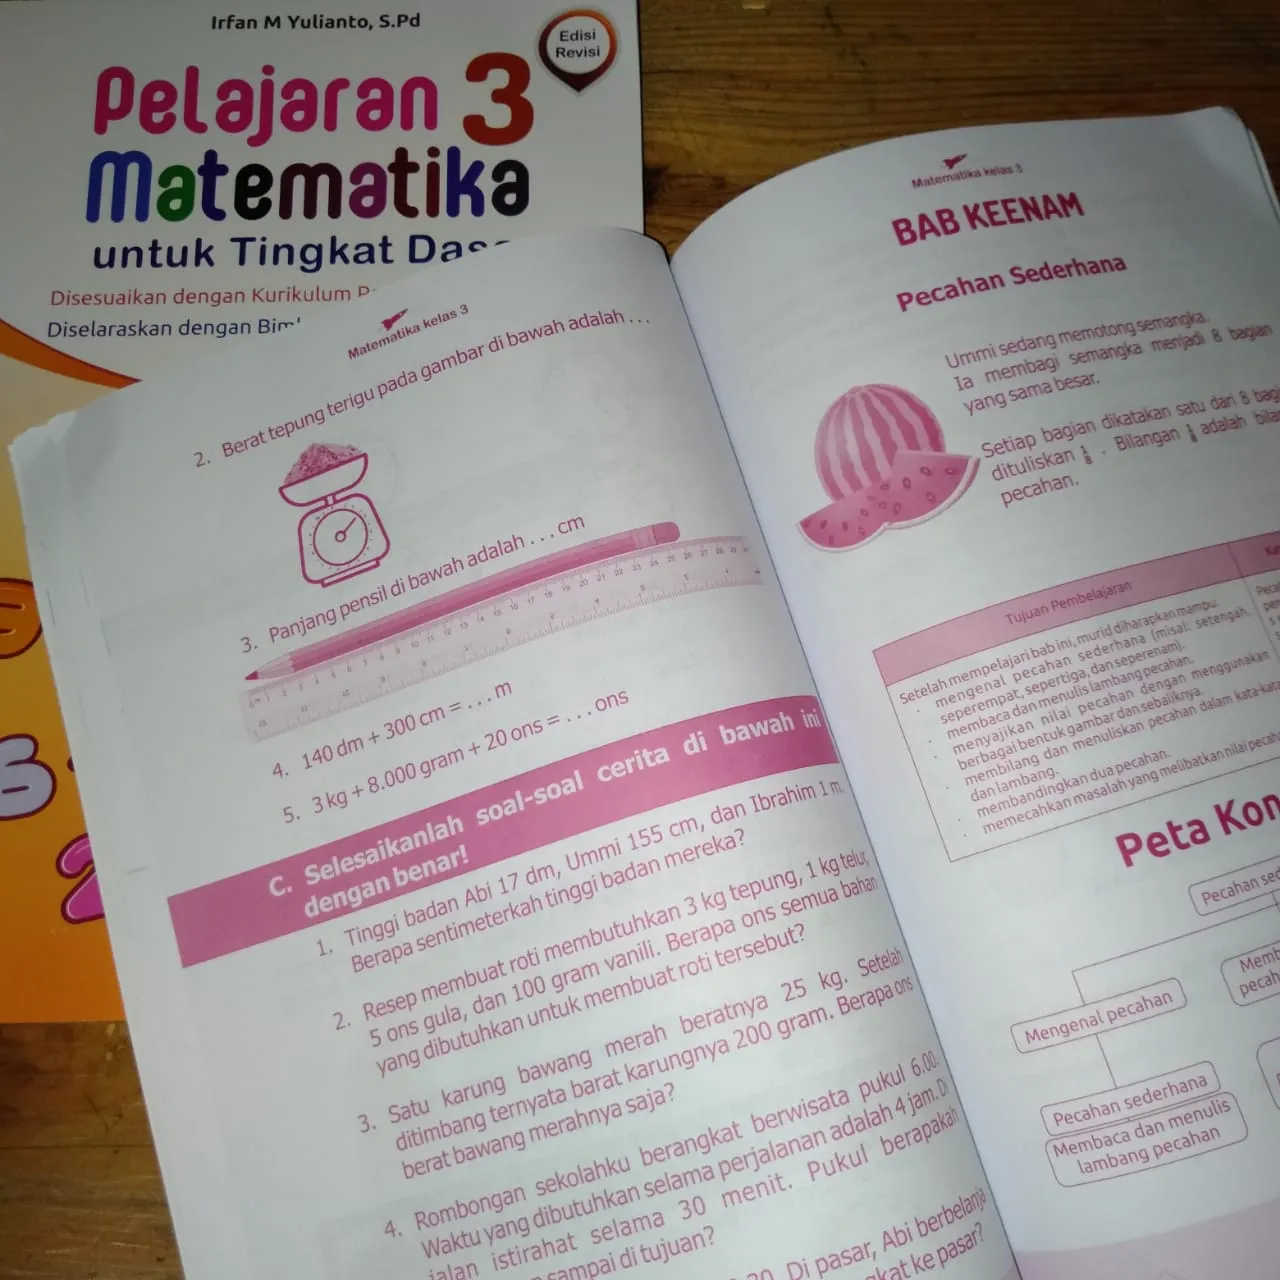 Gmb Buku Pelajaran Matematika Untuk Tingkat Dasar Buku Matematika Sd Kelas 1 2 Dan 3 Buku Jago Berhitung Buku Kekinian Lazada Indonesia